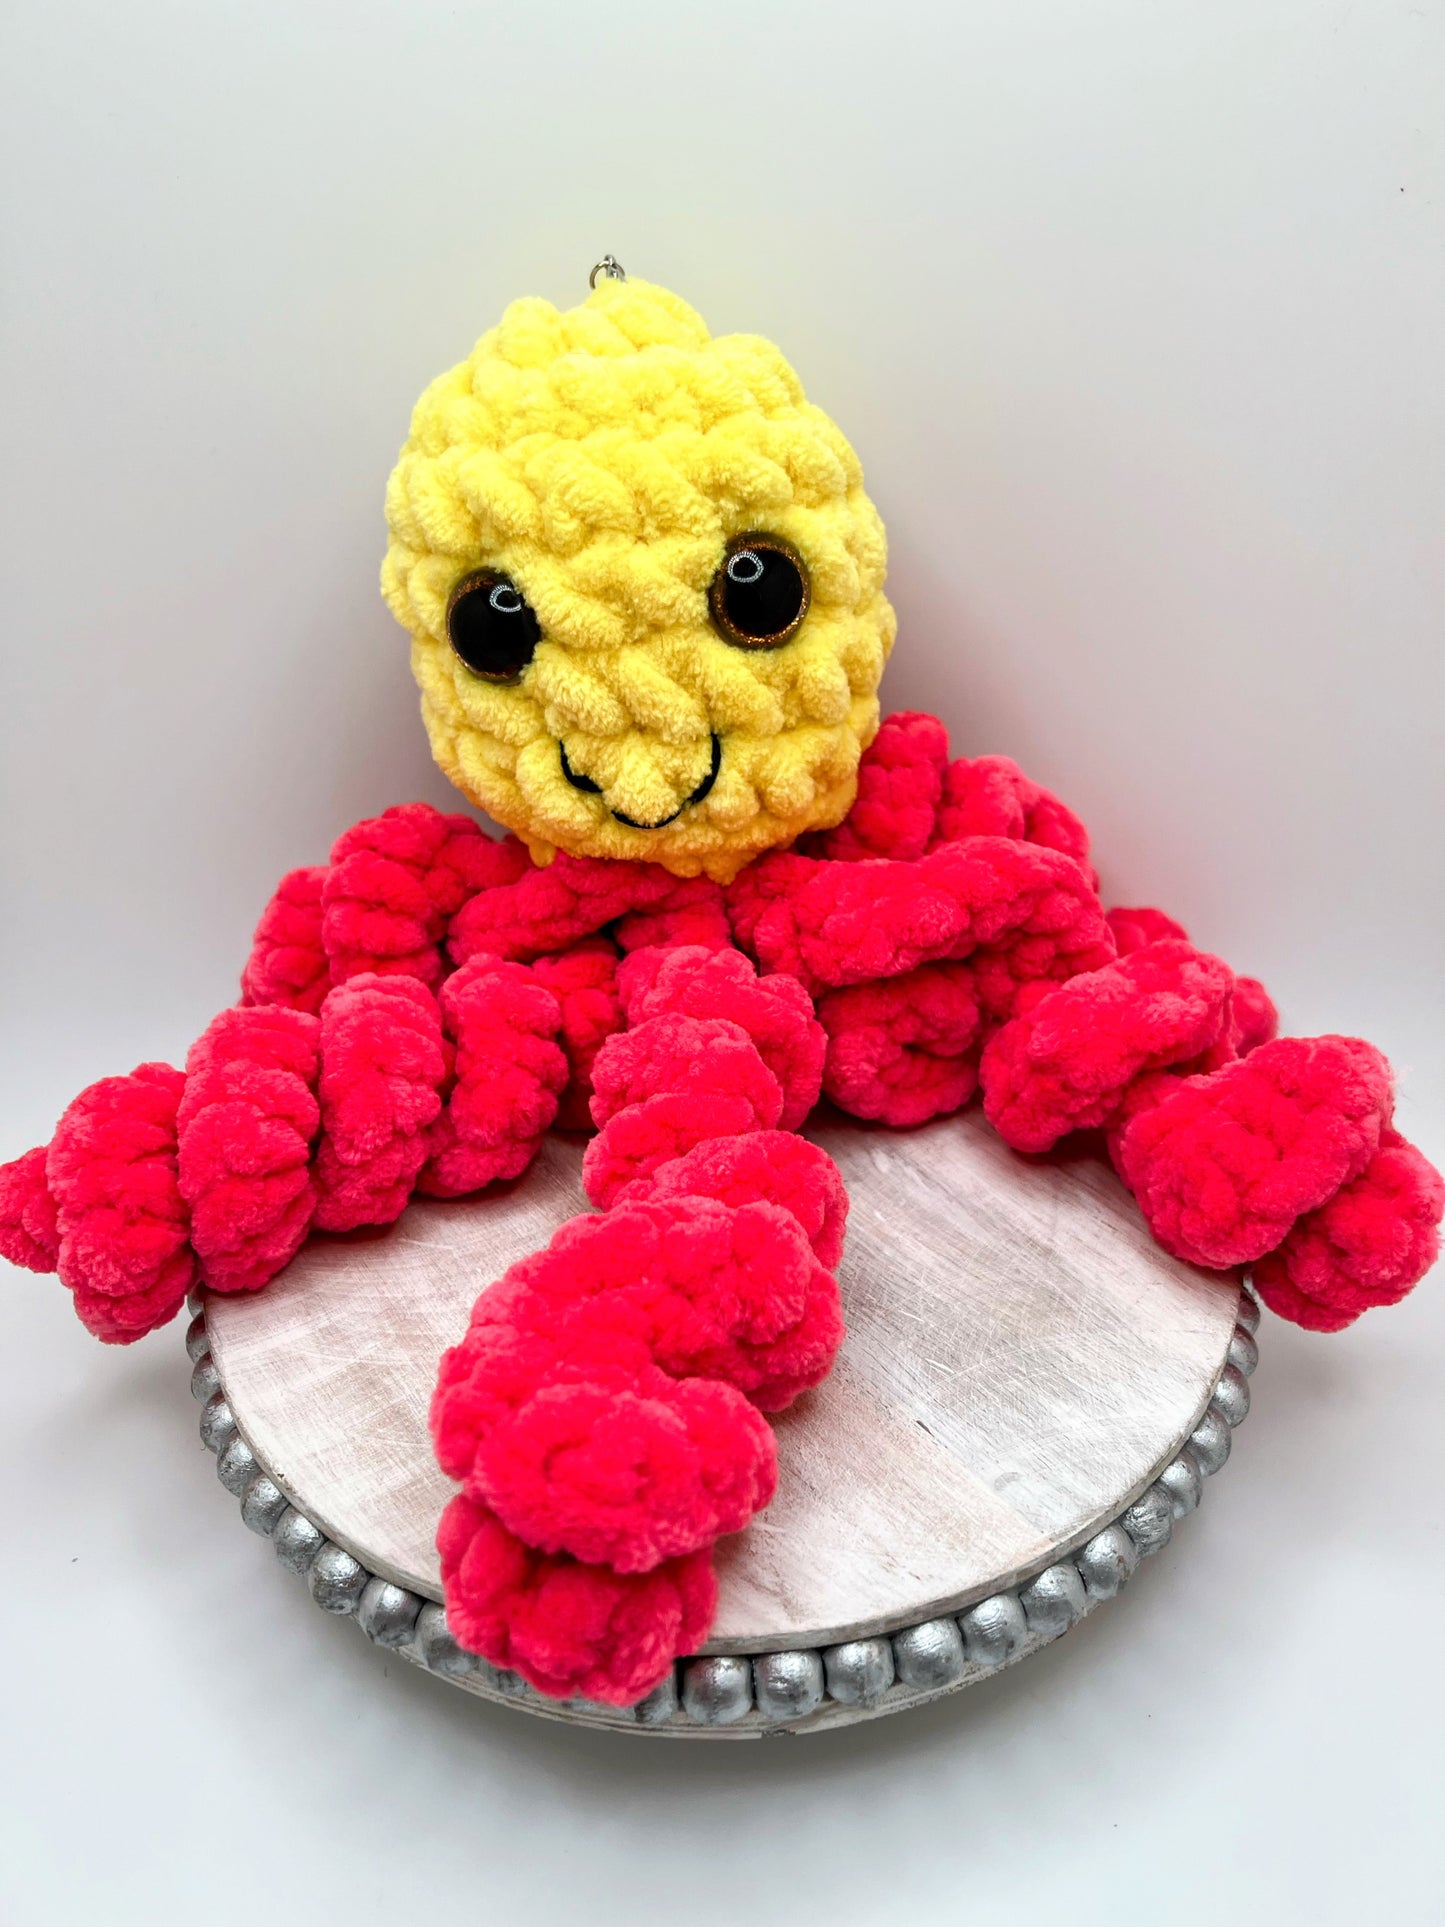 Stuffed Yellow Hot Pink Jellyfish - Crochet Knitted Amigurumi Toy